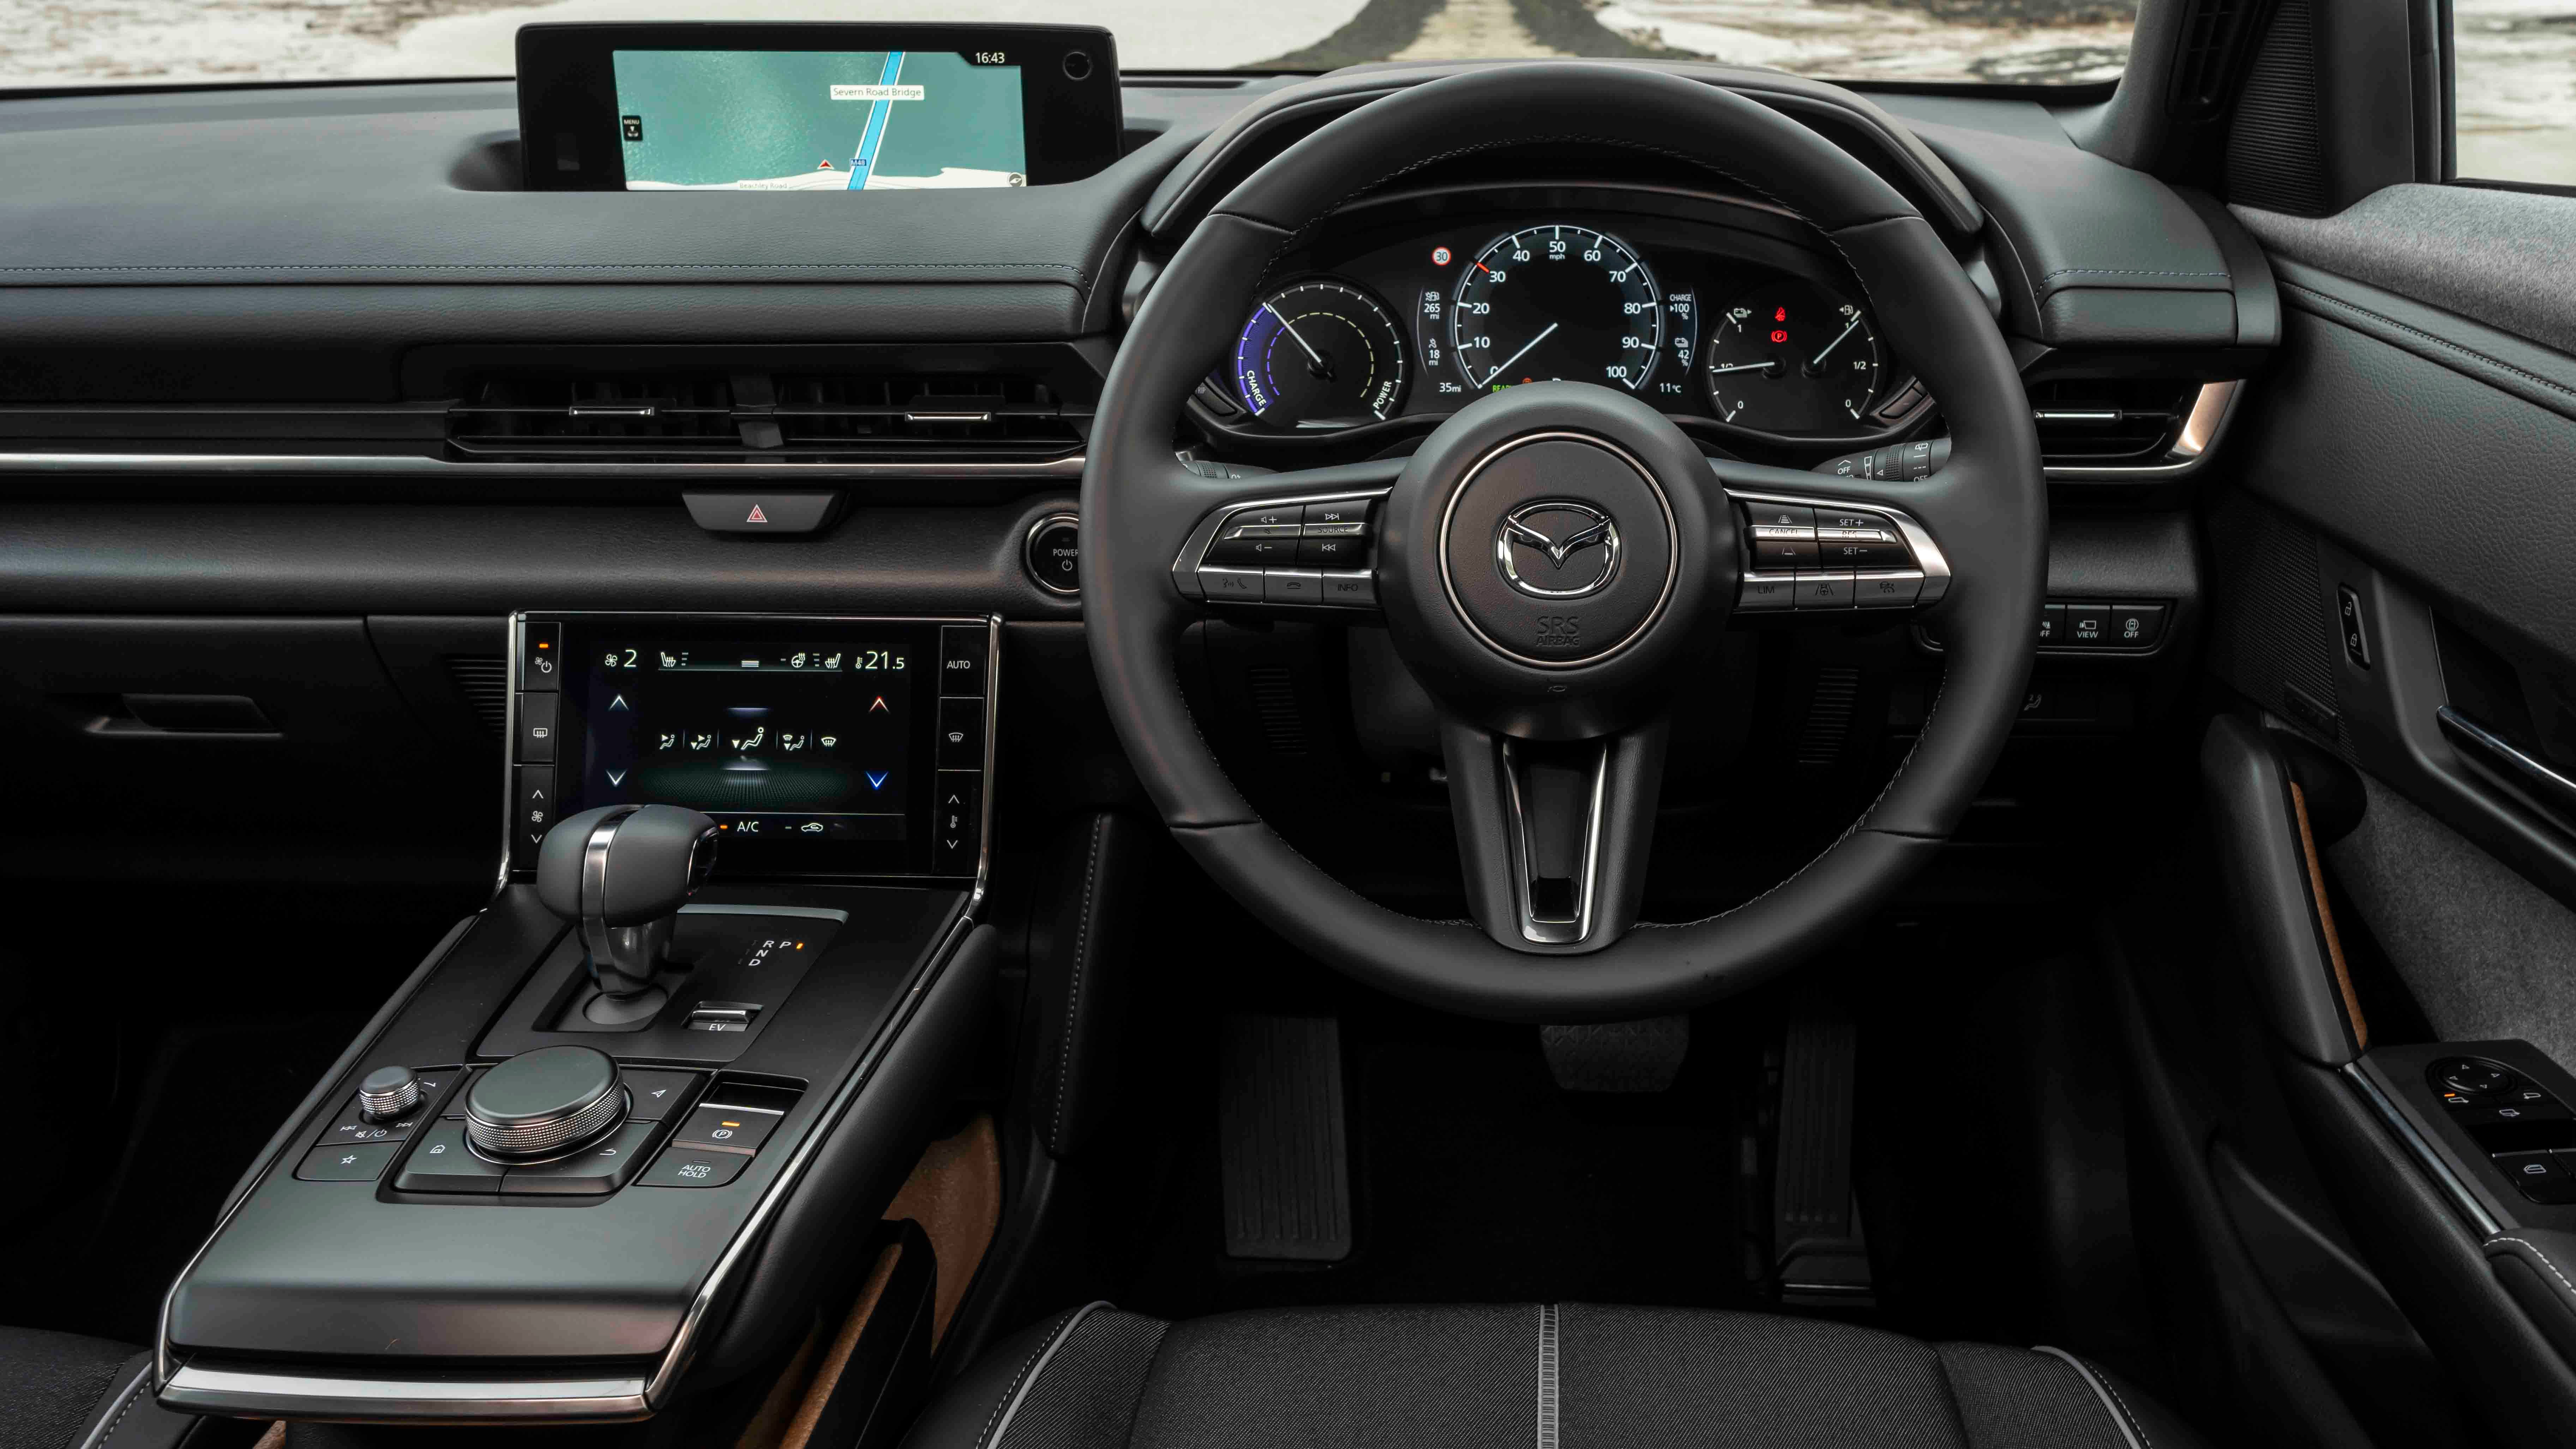 Mazda MX-30 interior